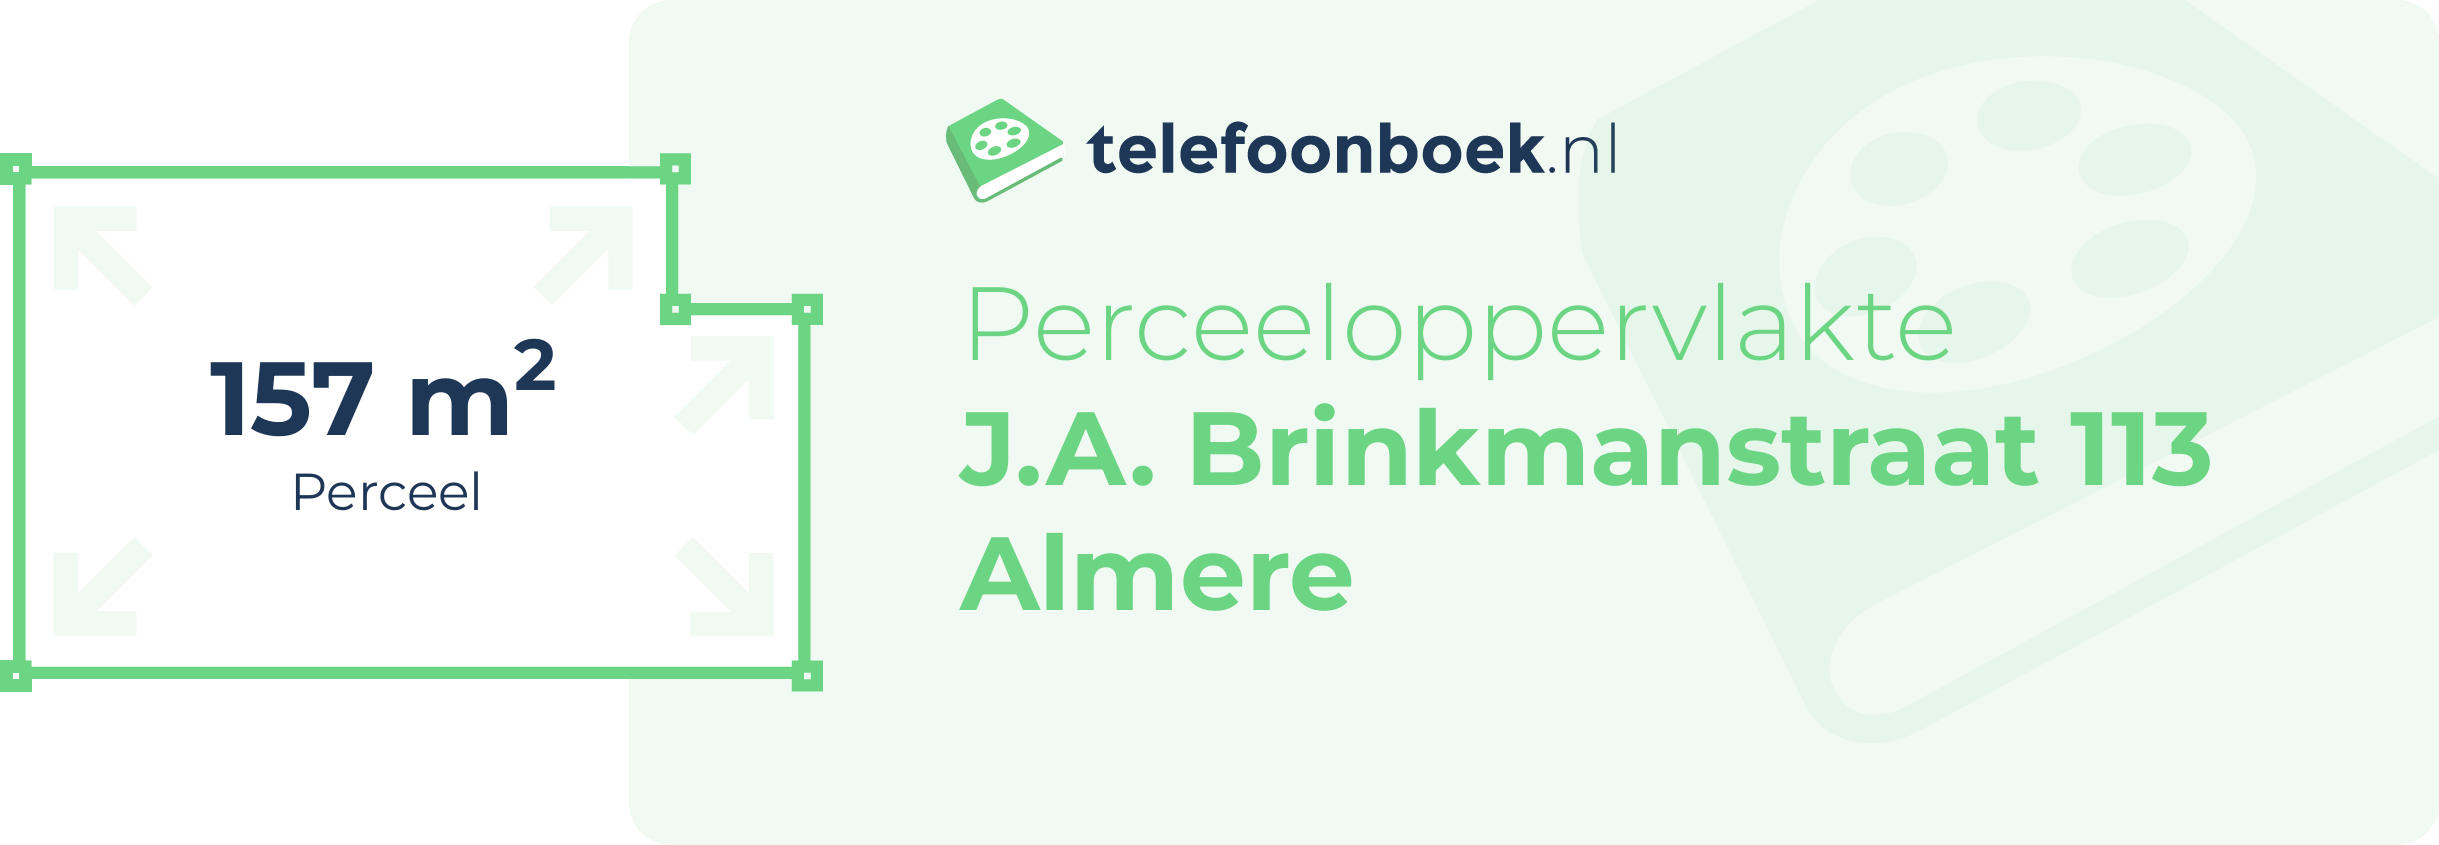 Perceeloppervlakte J.A. Brinkmanstraat 113 Almere